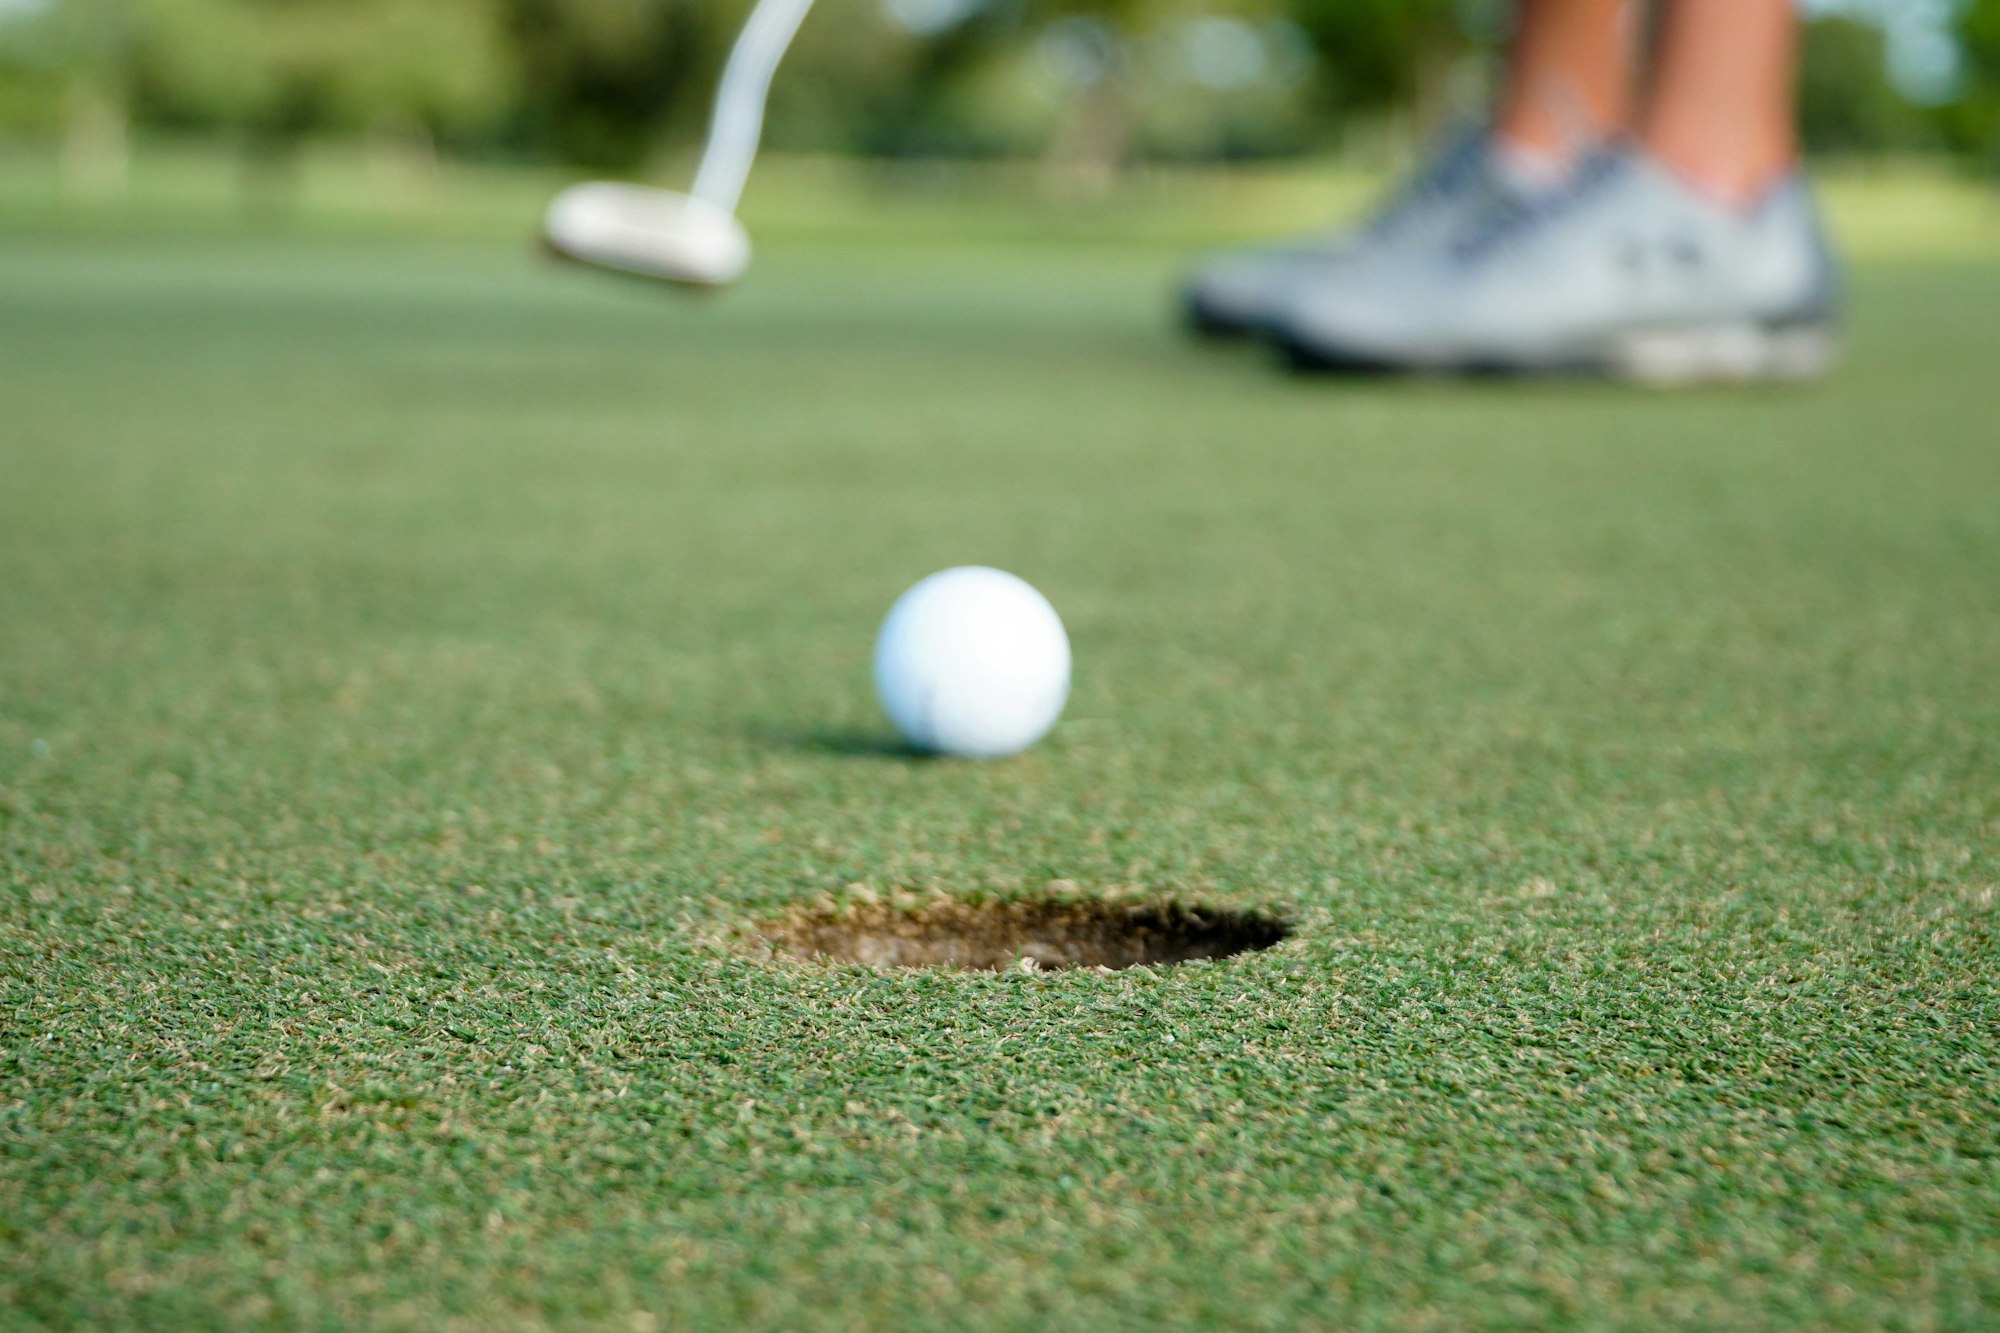 The technology enhancing golf